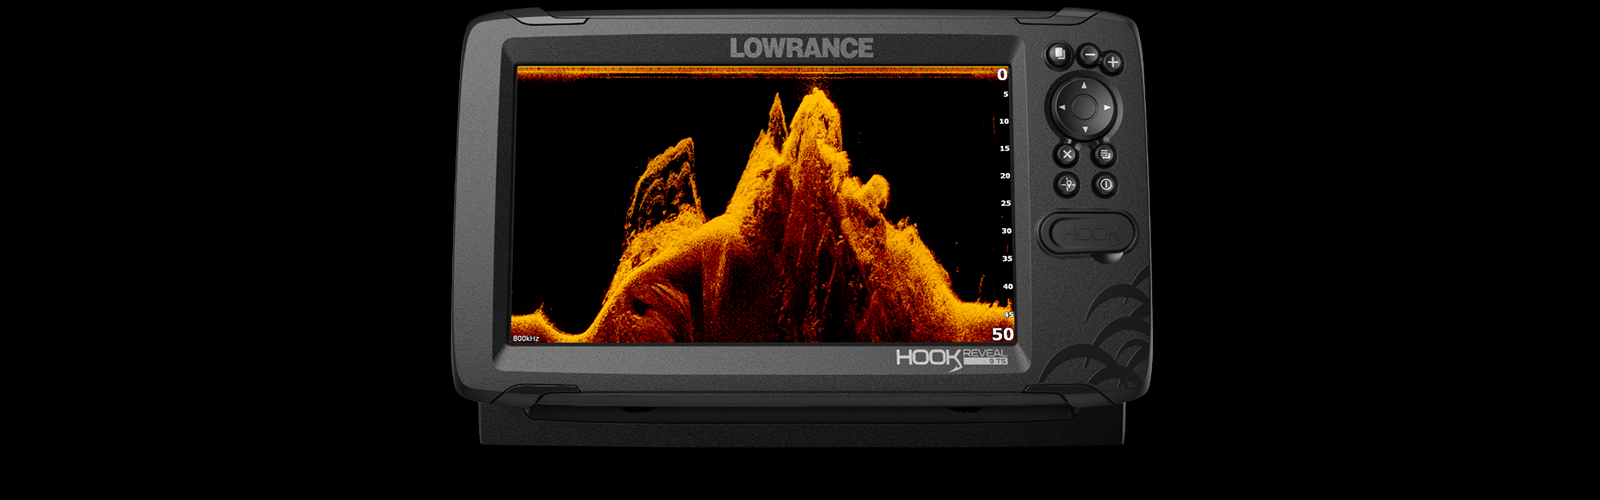 Lowrance hook reveal 9 tripleshot, chirp + downscan™ + sidescan